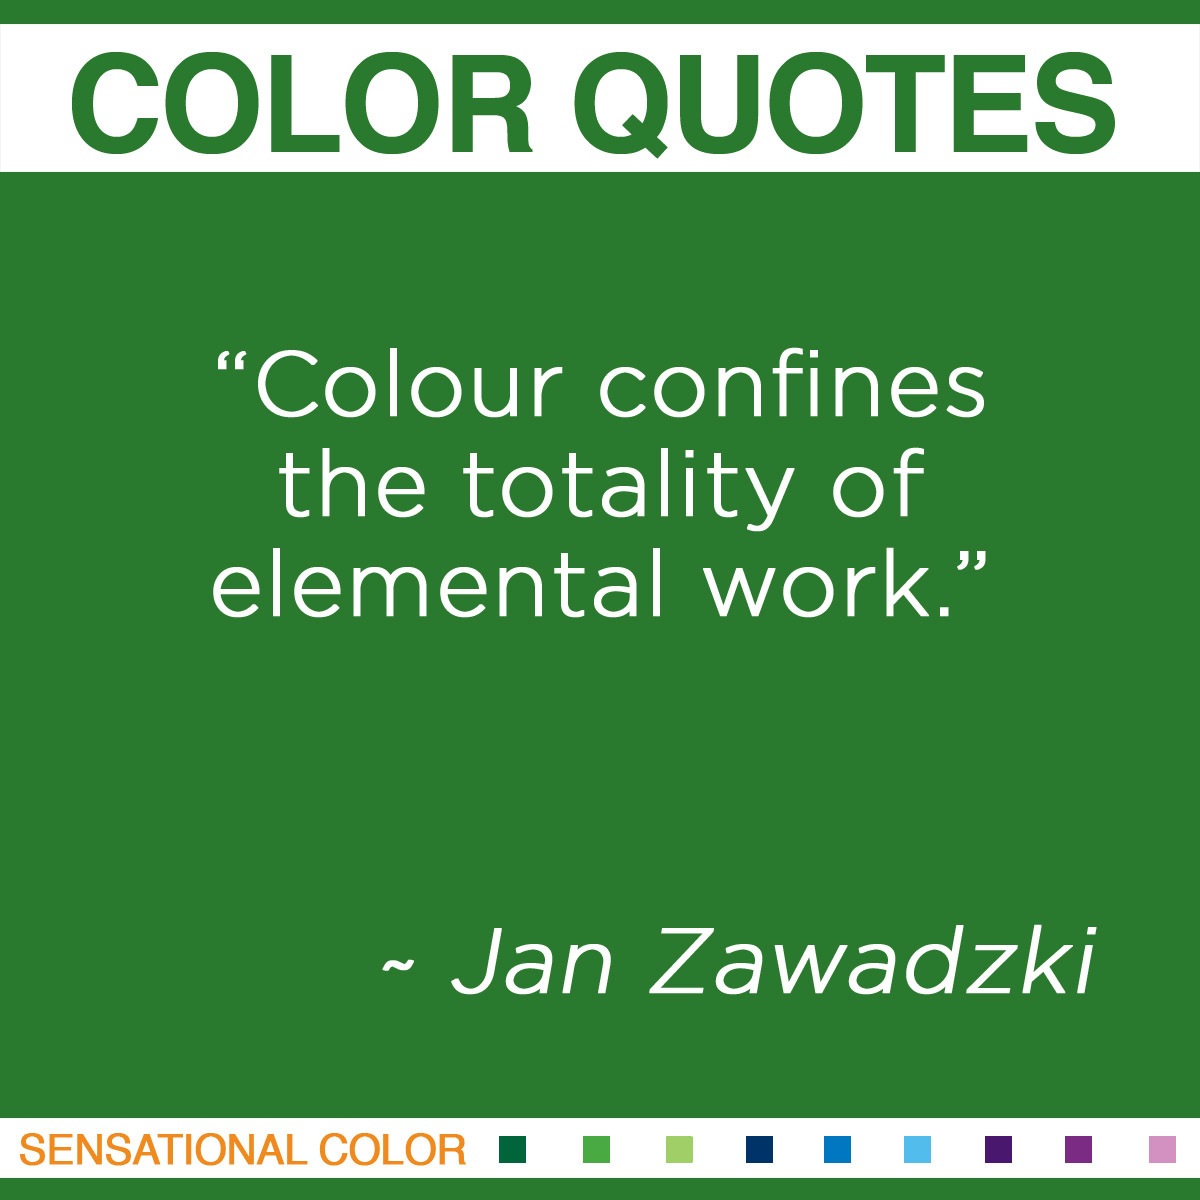 “Colour confines the totality of elemental work.” - Jan Zawadzki